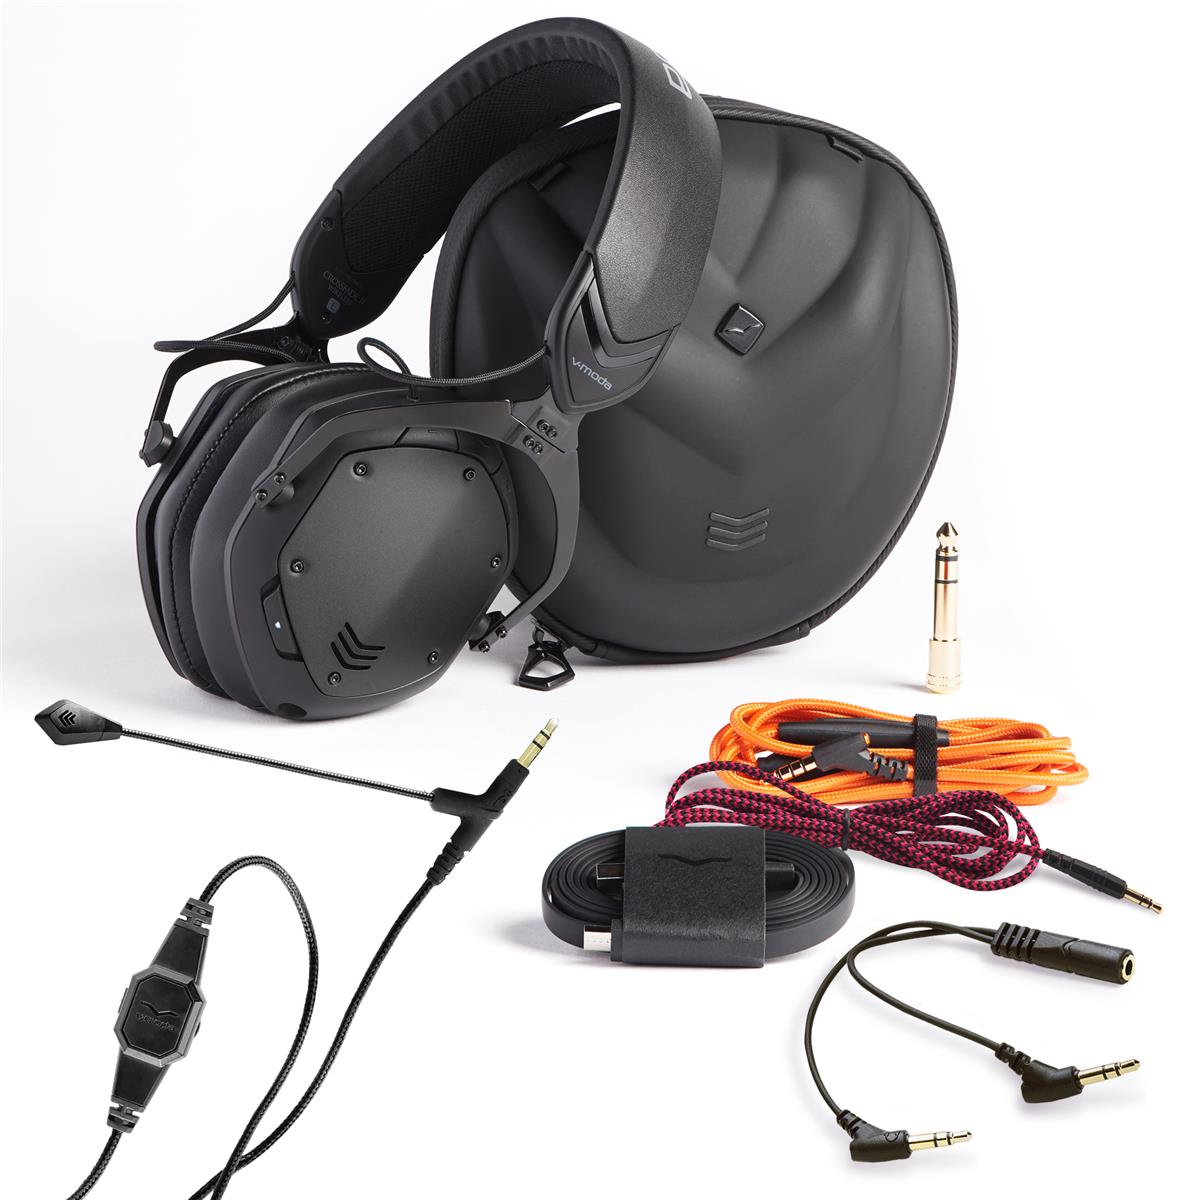 V-MODA Crossfade 2 Competition Ed. Wireless Over-Ear Headphone Bundle $49 + Free Shipping